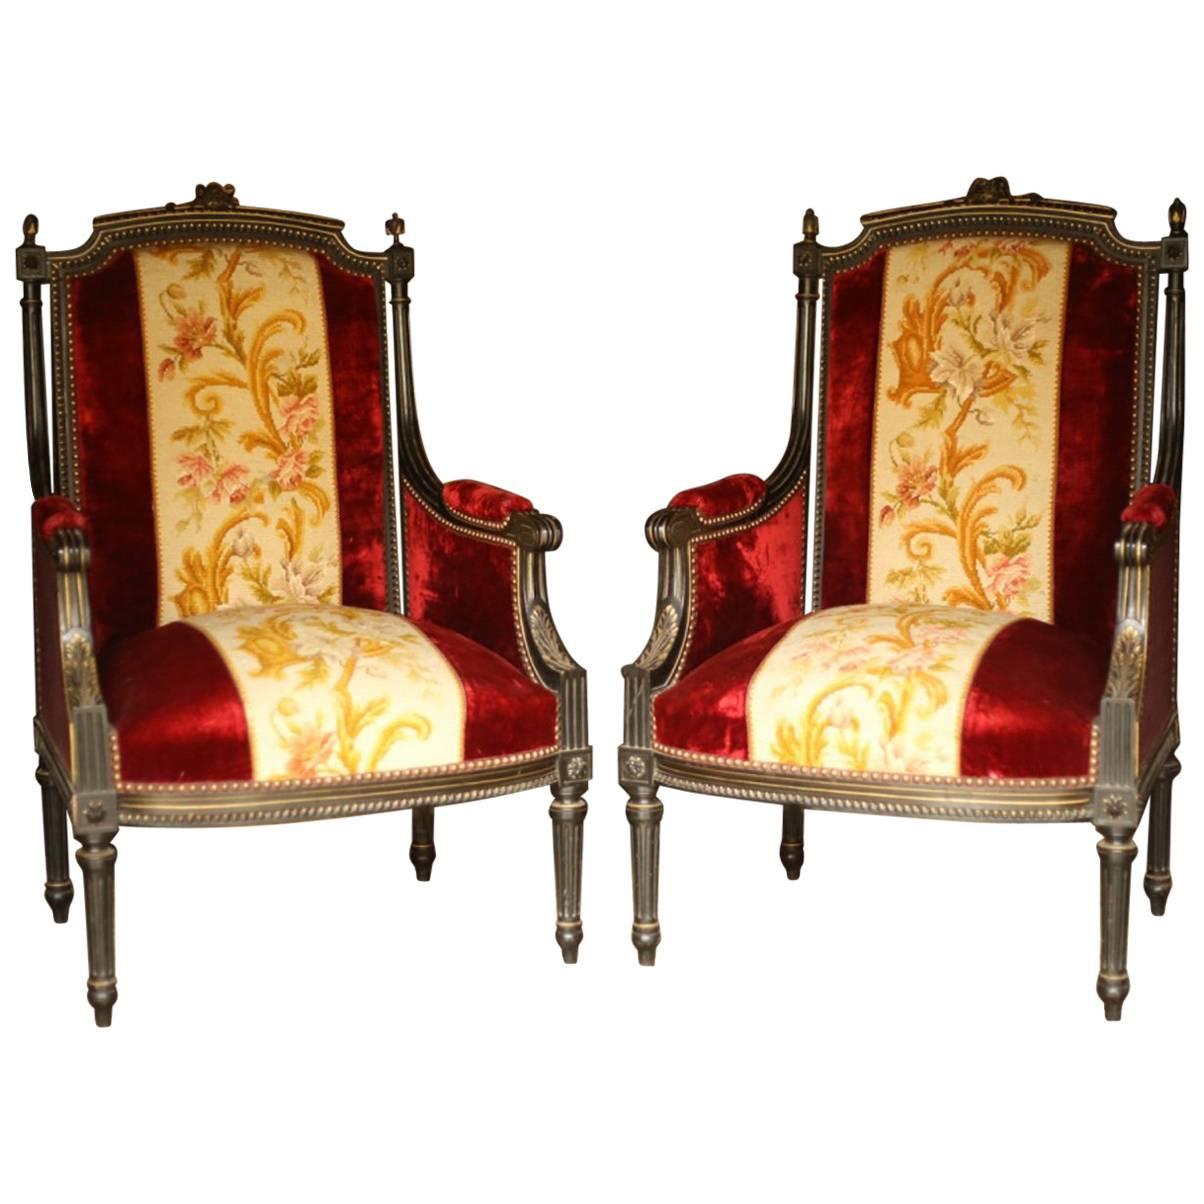 Gorgeous Pair of Velvet Upholstered Throne Chairs